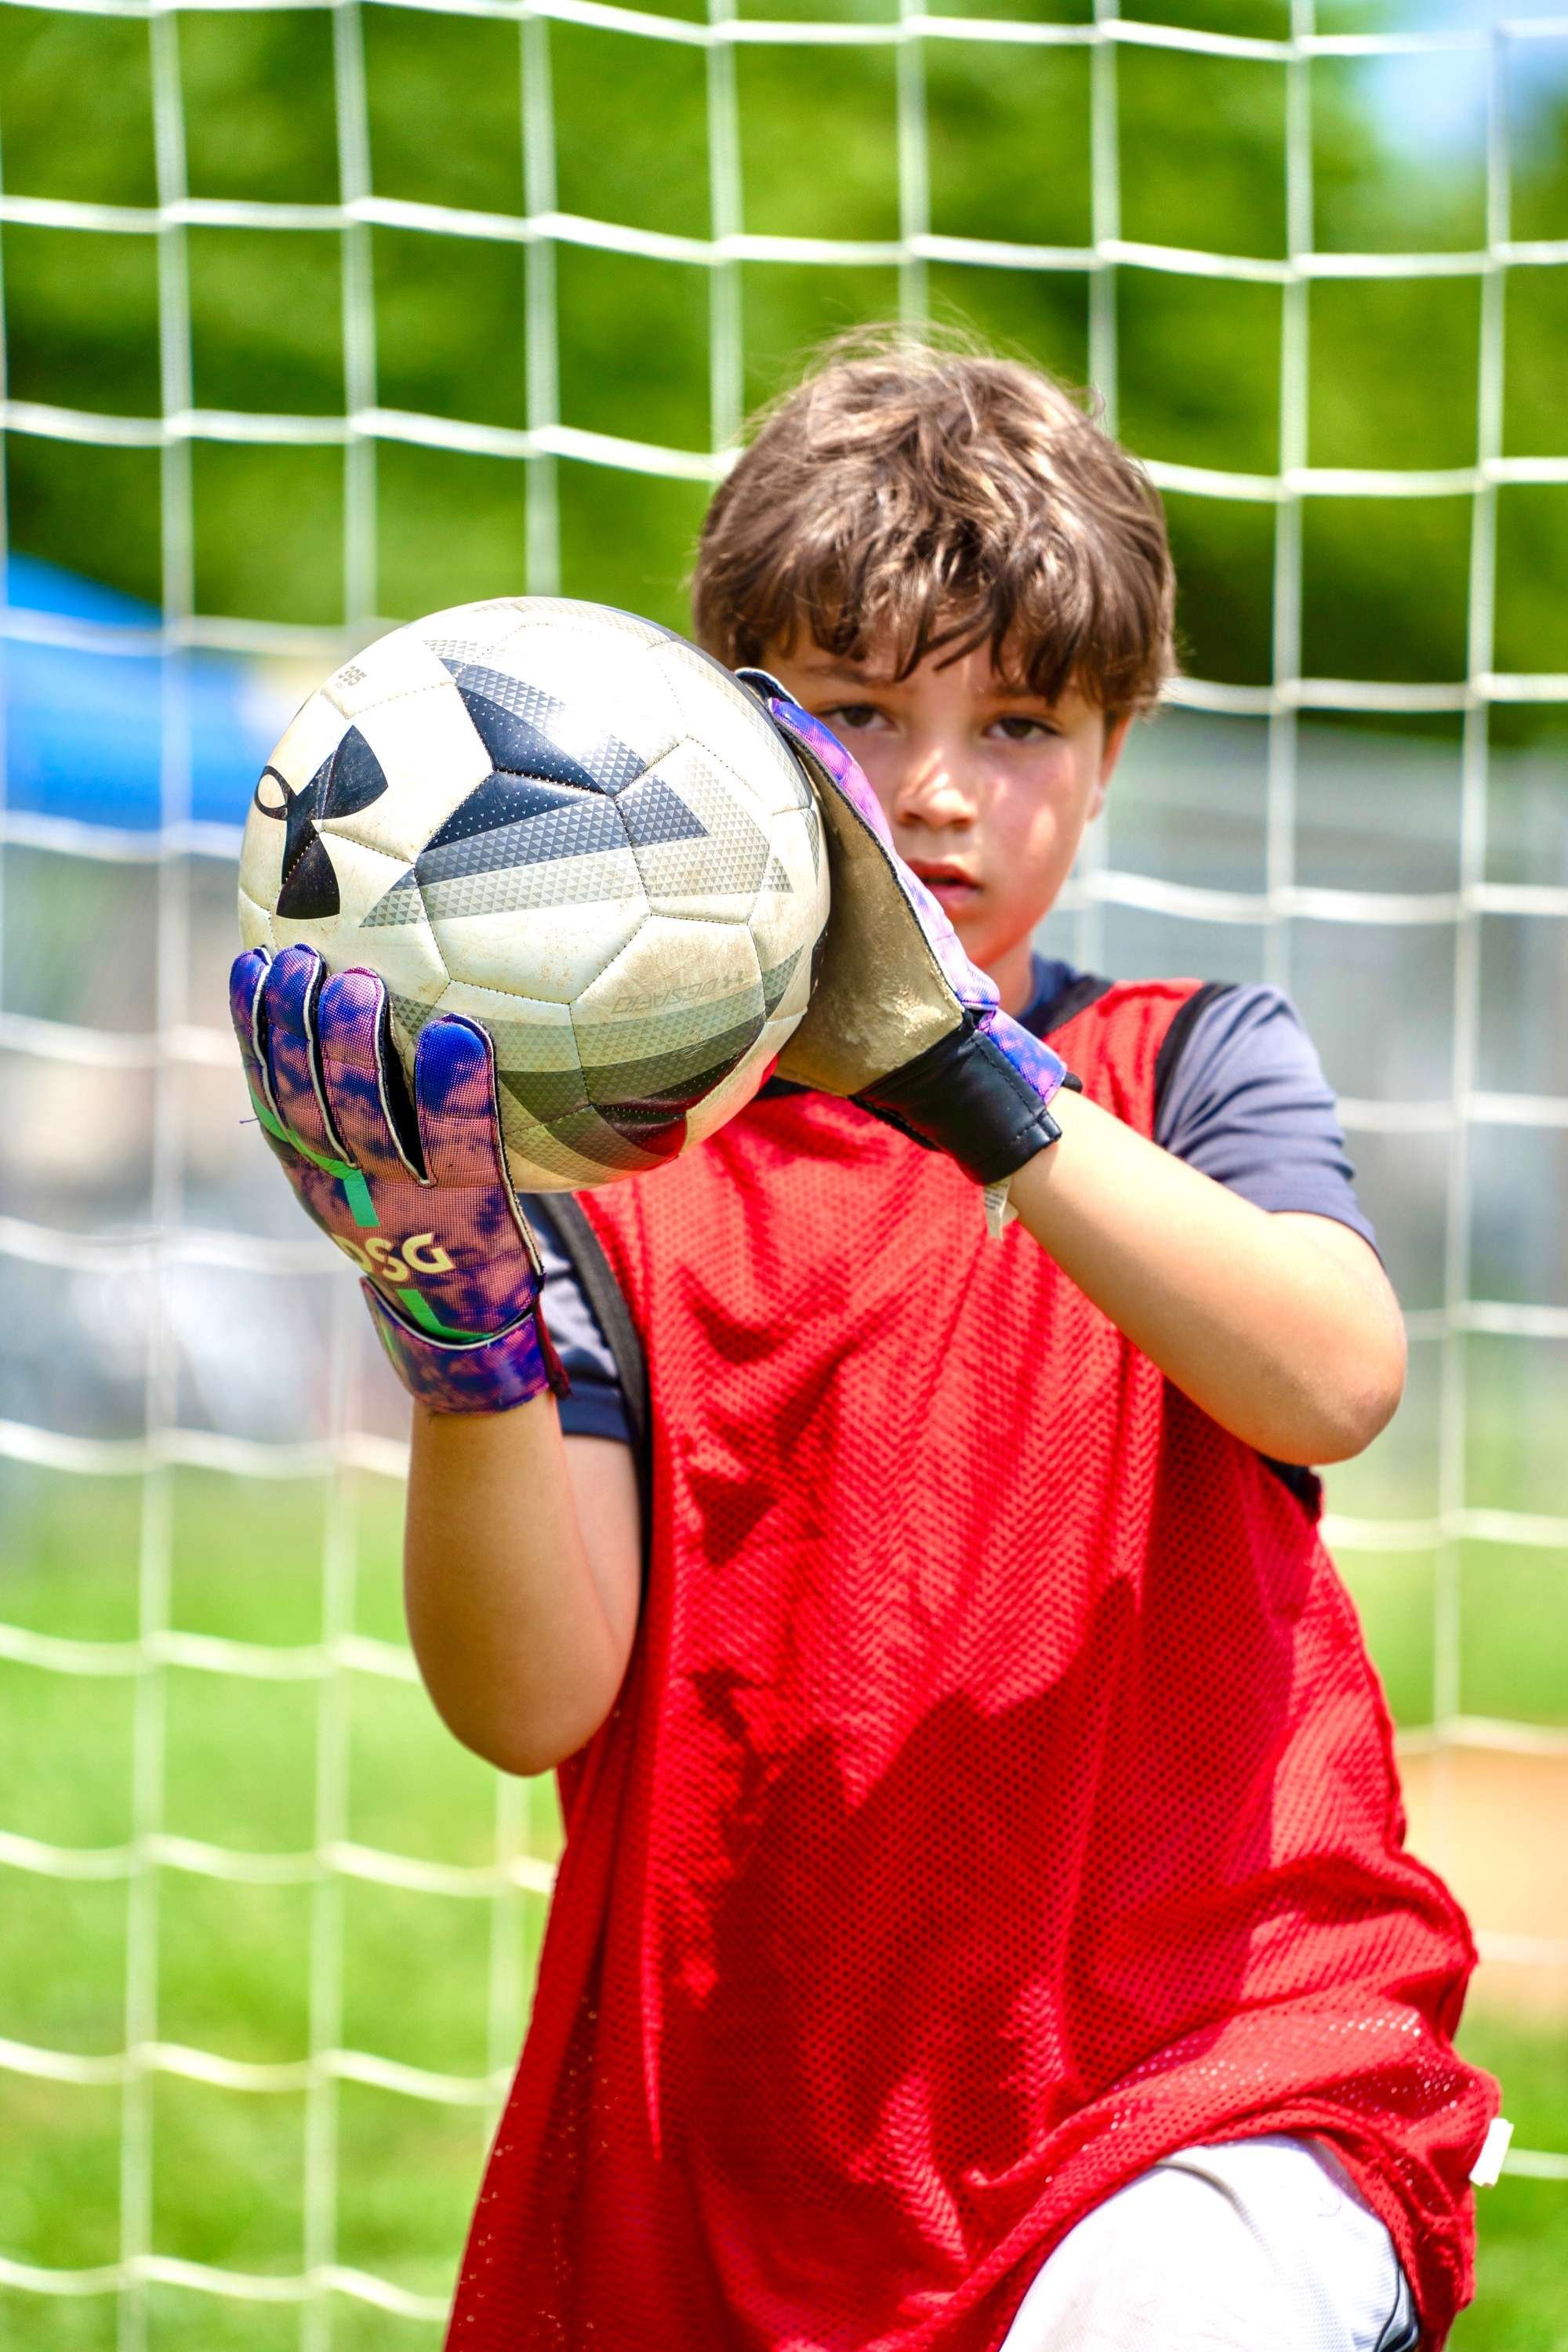 Dc-way-soccer-club-for-kids-in-washington-dc-summer-camp-at-tyler-elementary-school- 0167.jpg